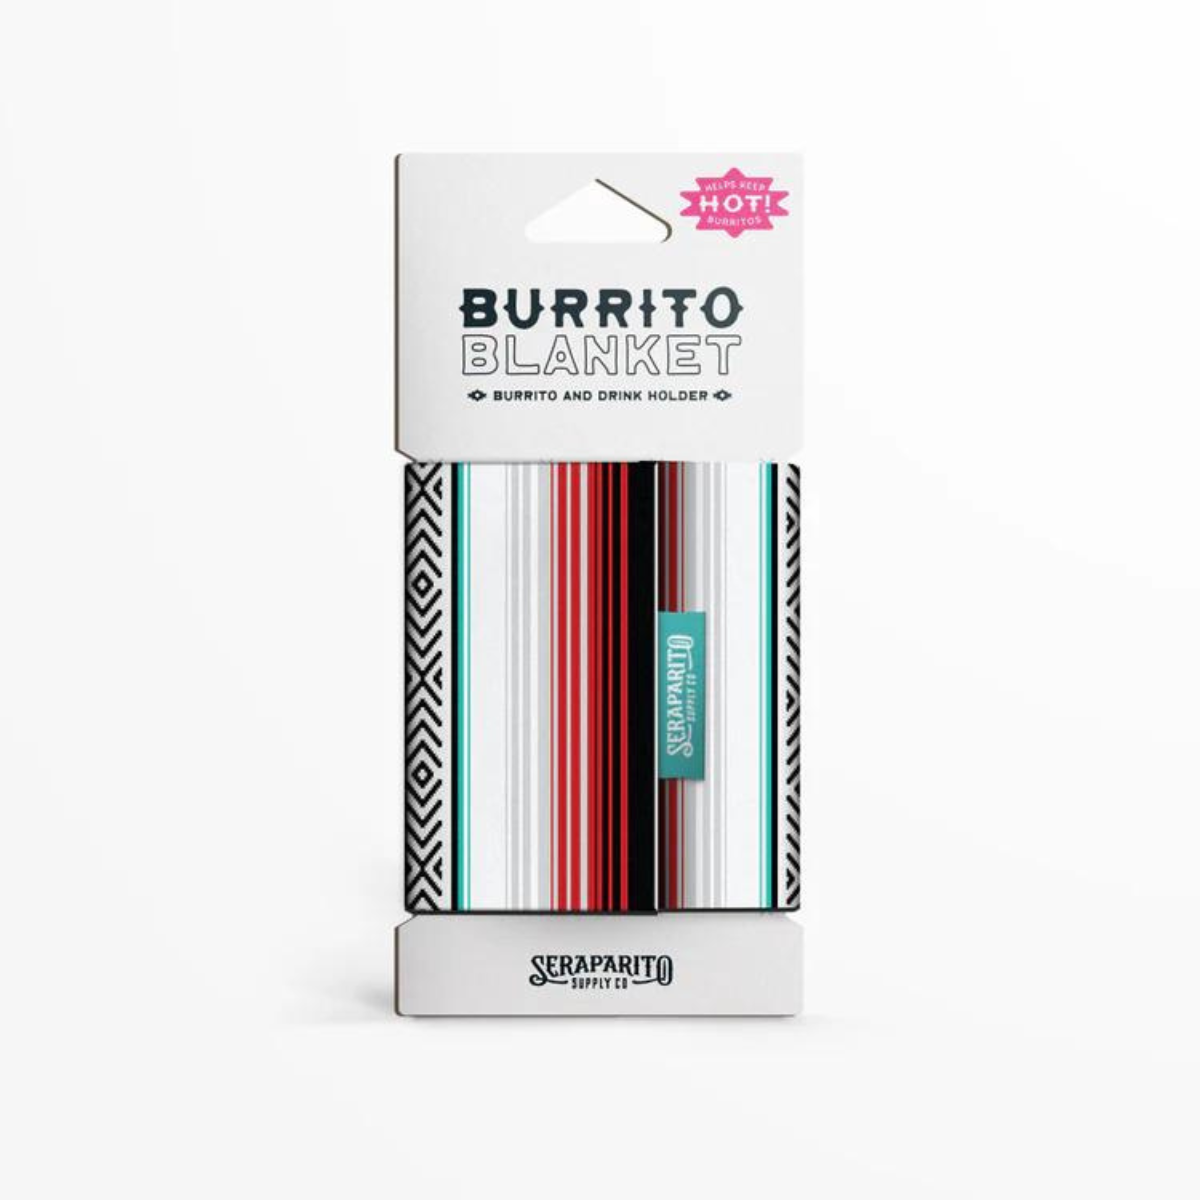 Burrito Blanket Can Cooler